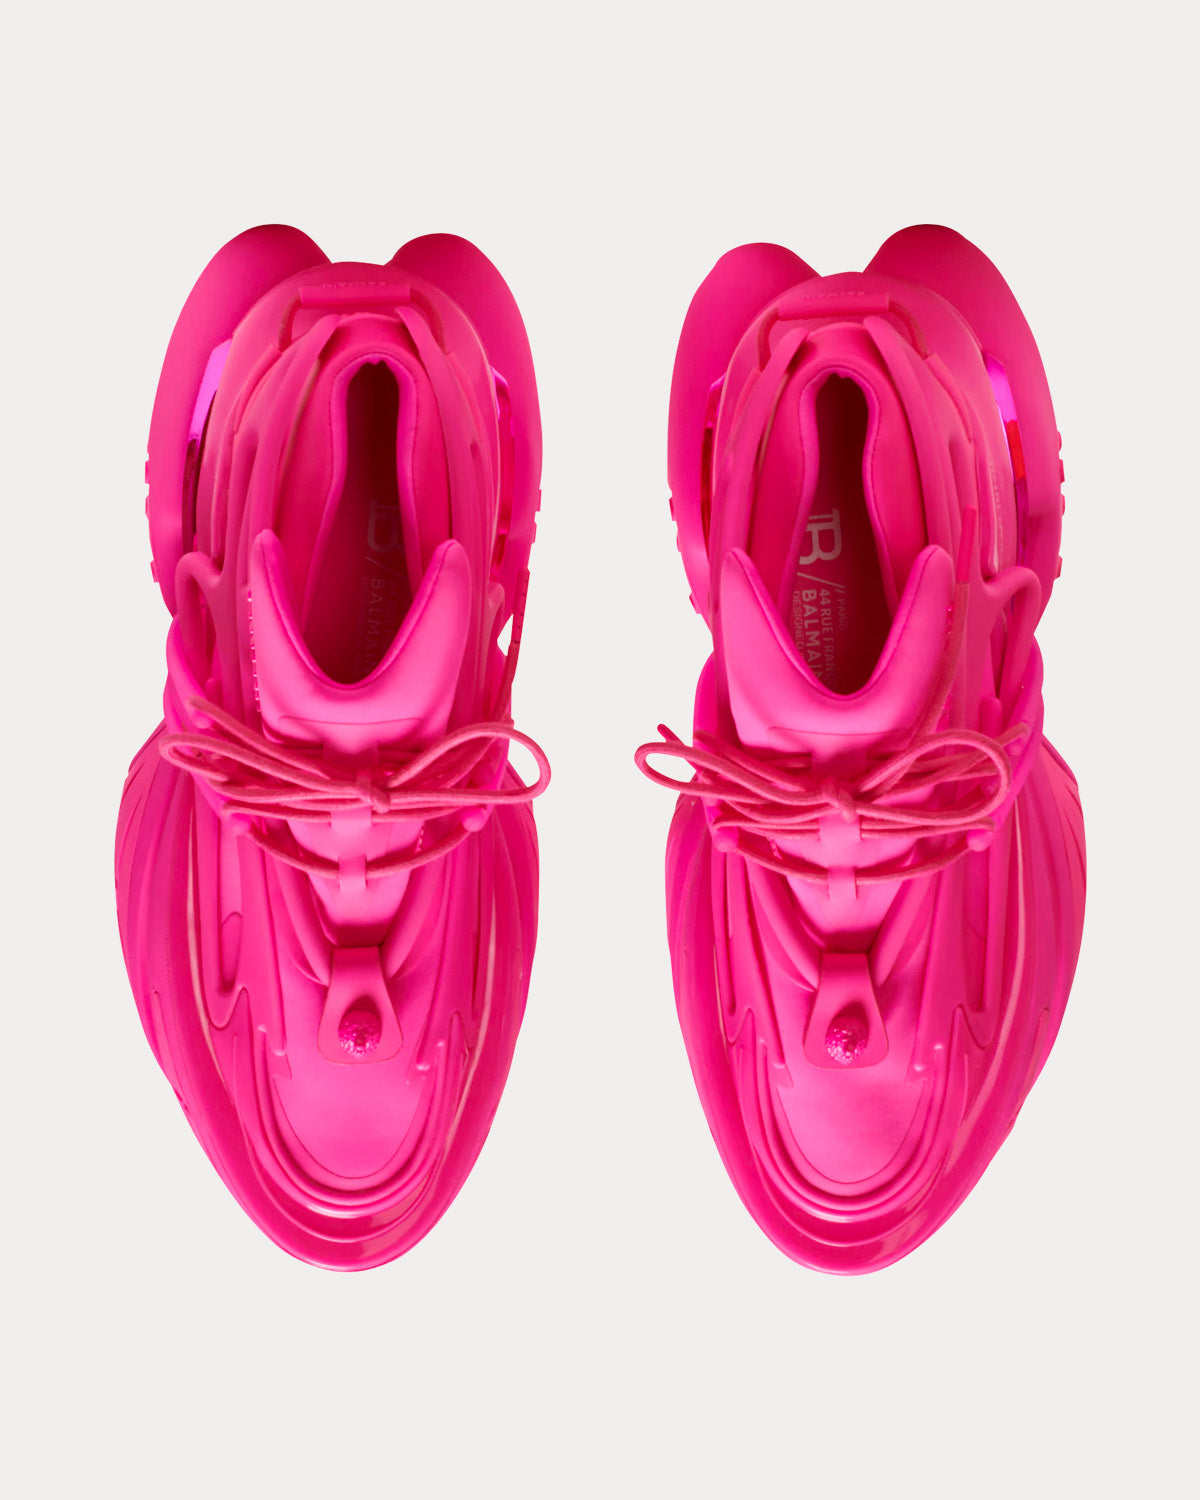 Balmain - Unicorn Neoprene & Leather Fluo Pink Low Top Sneakers